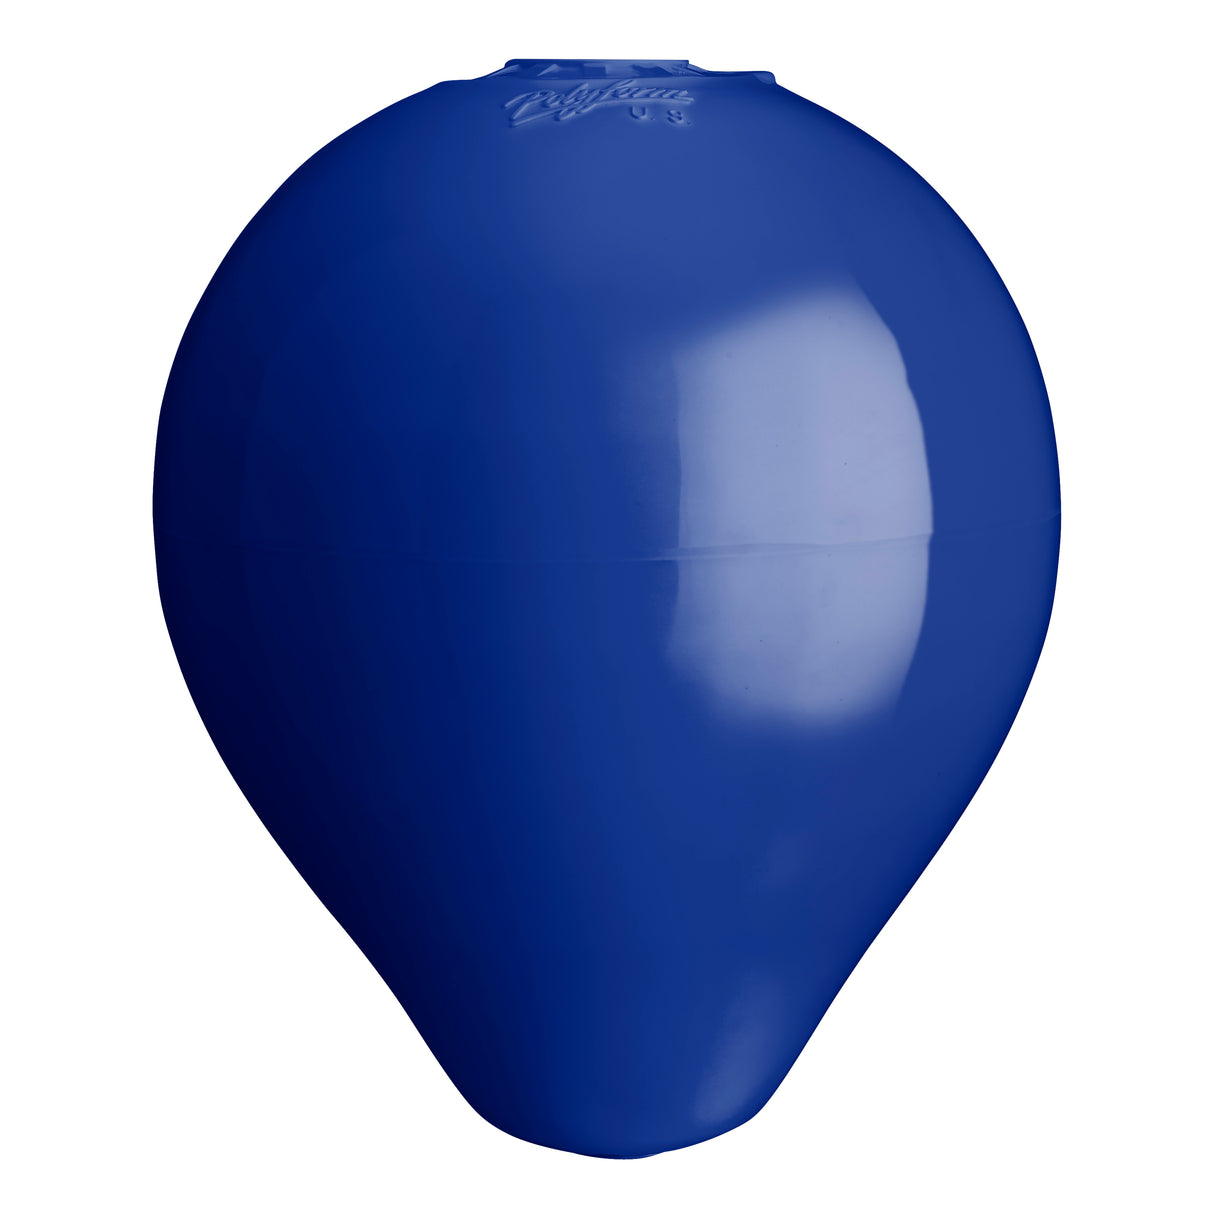 Hole through center mooring and marker buoy, Polyform CC-1 Cobalt Blue